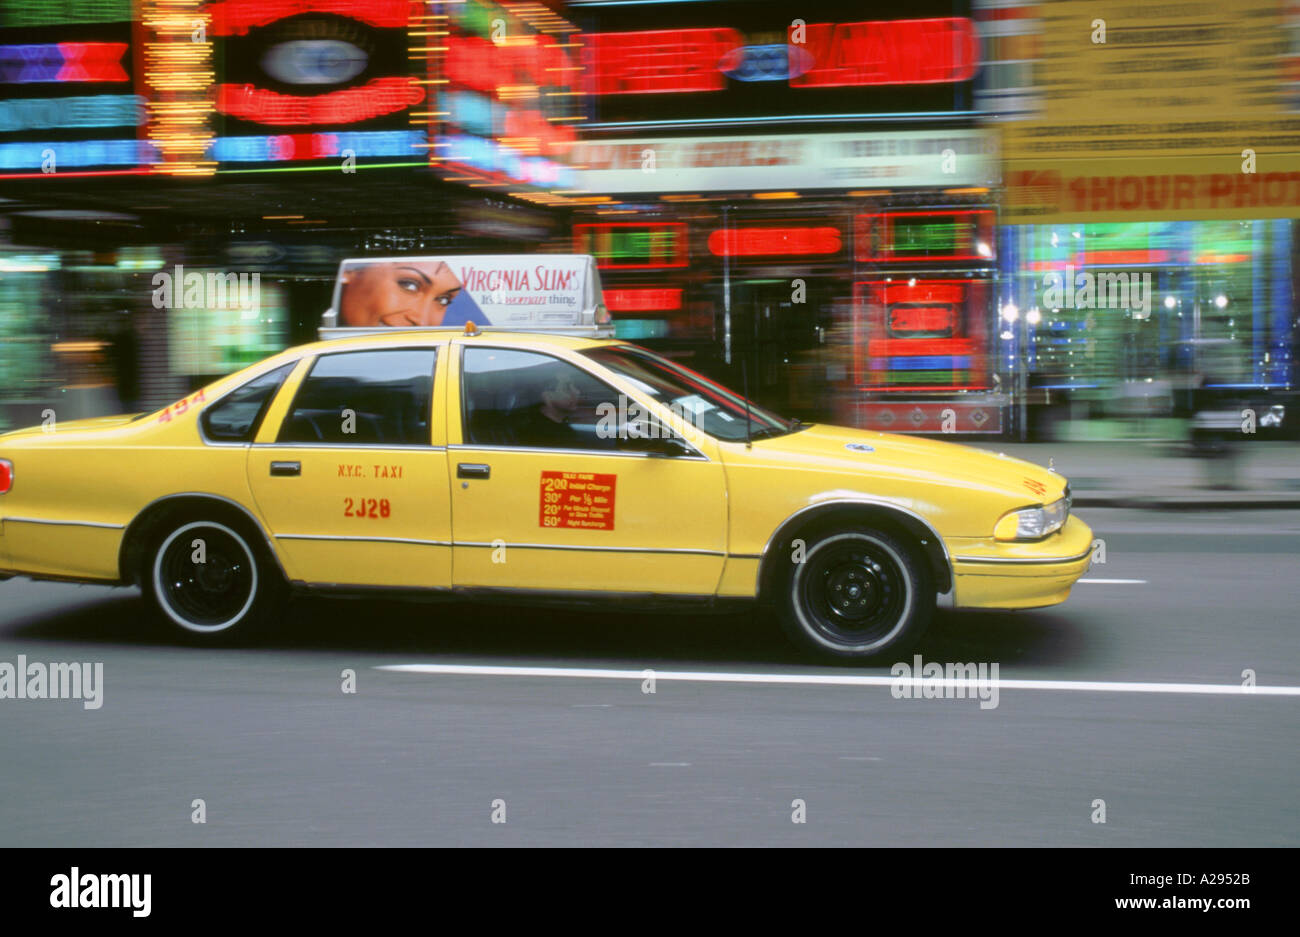 new-york-yellow-taxi-cab-1995-A2952B.jpg